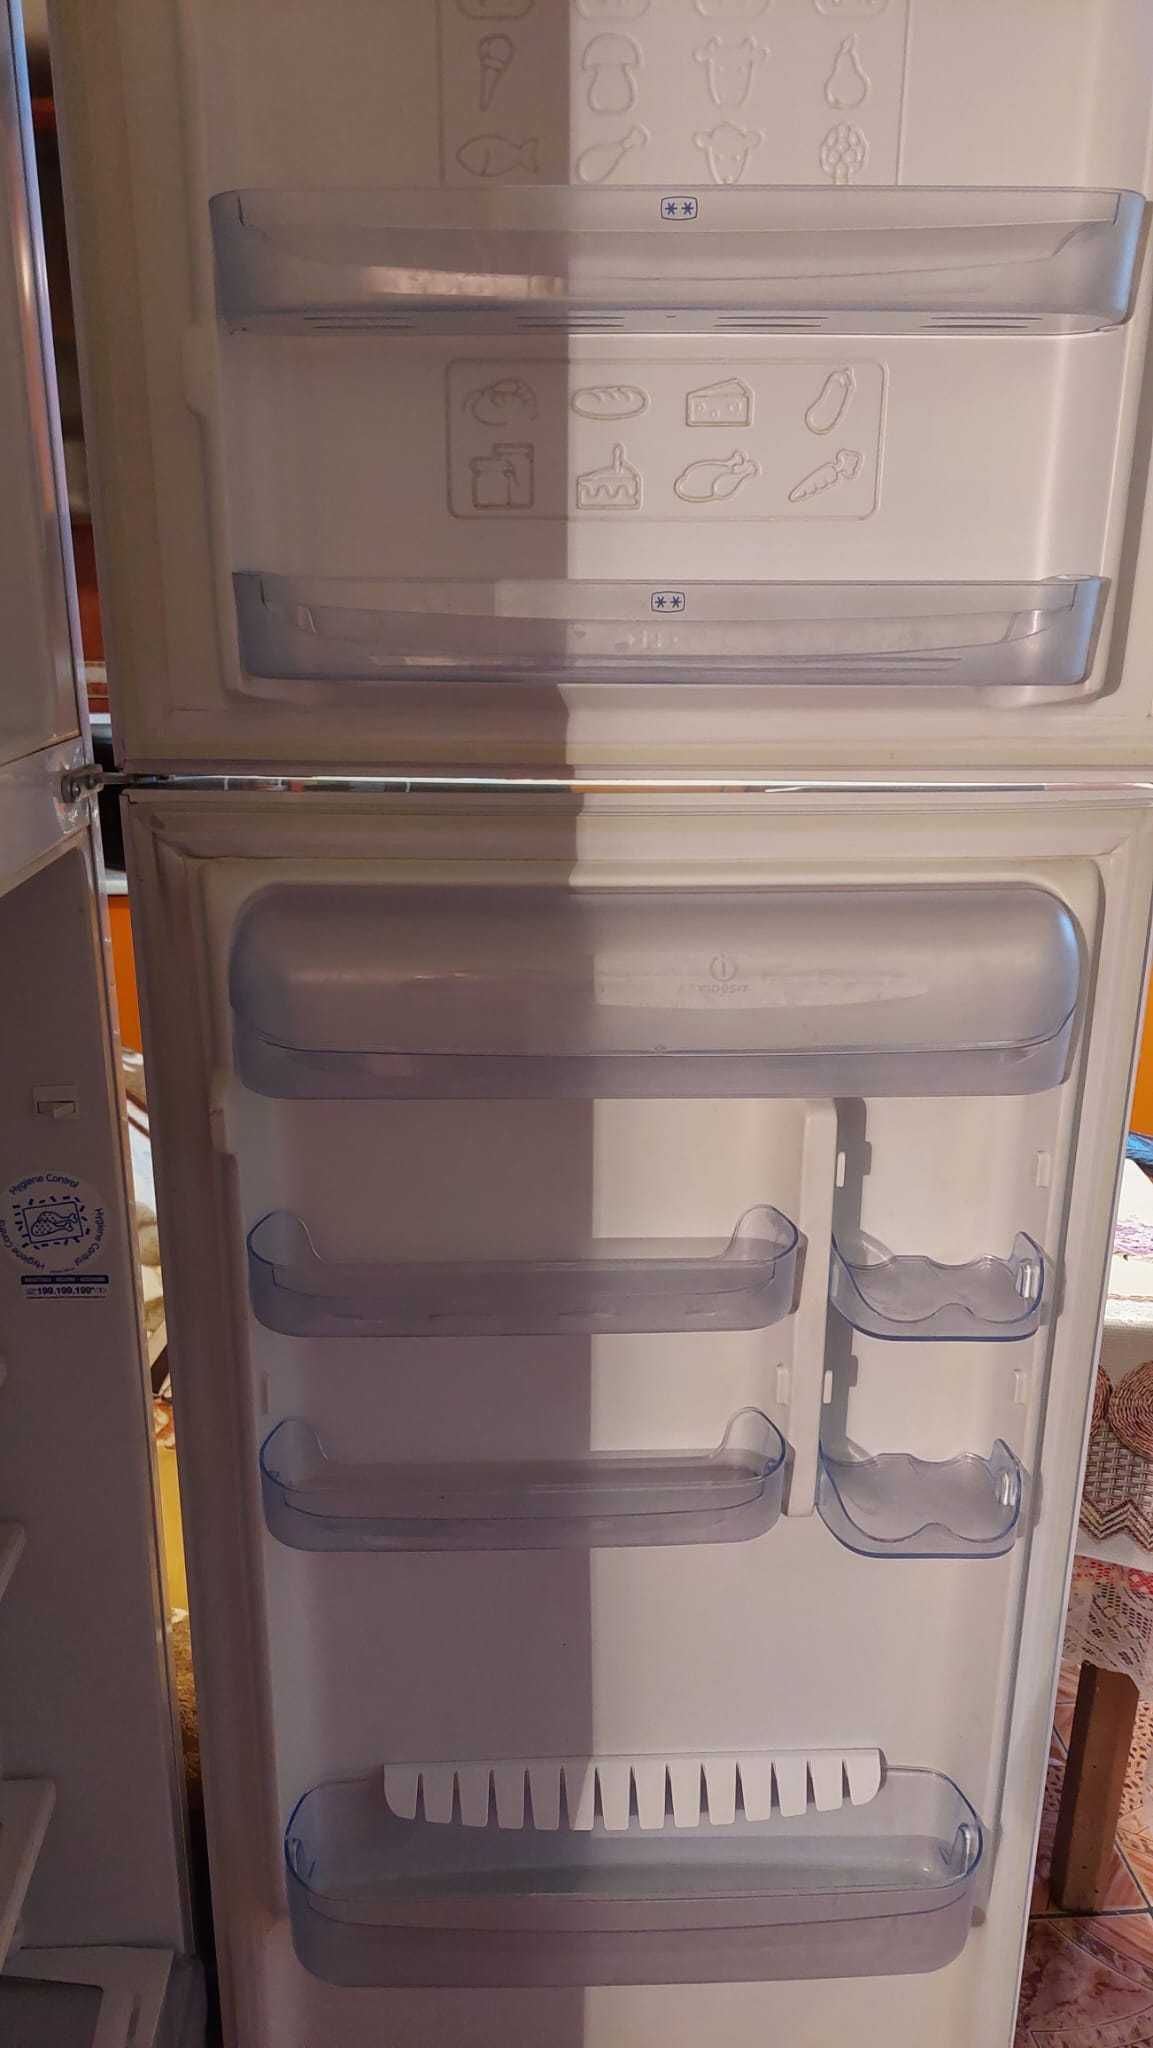 Combina frigorifica / frigider Indesit TAN5, alba defecta pentru piese